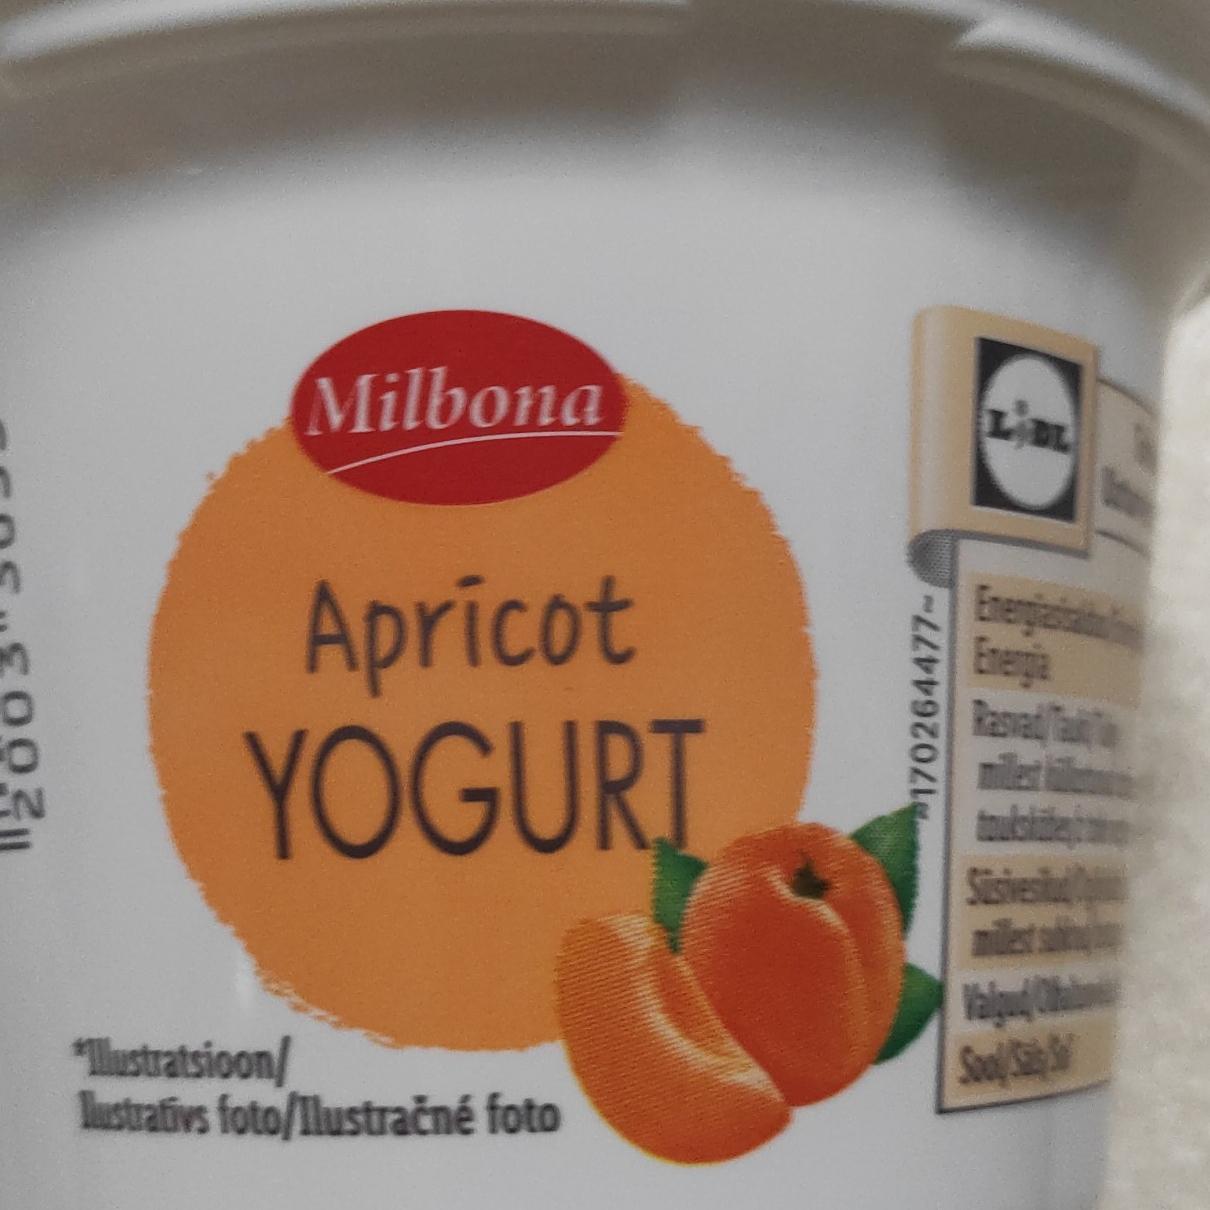 Fotografie - Apricot yogurt Milbona